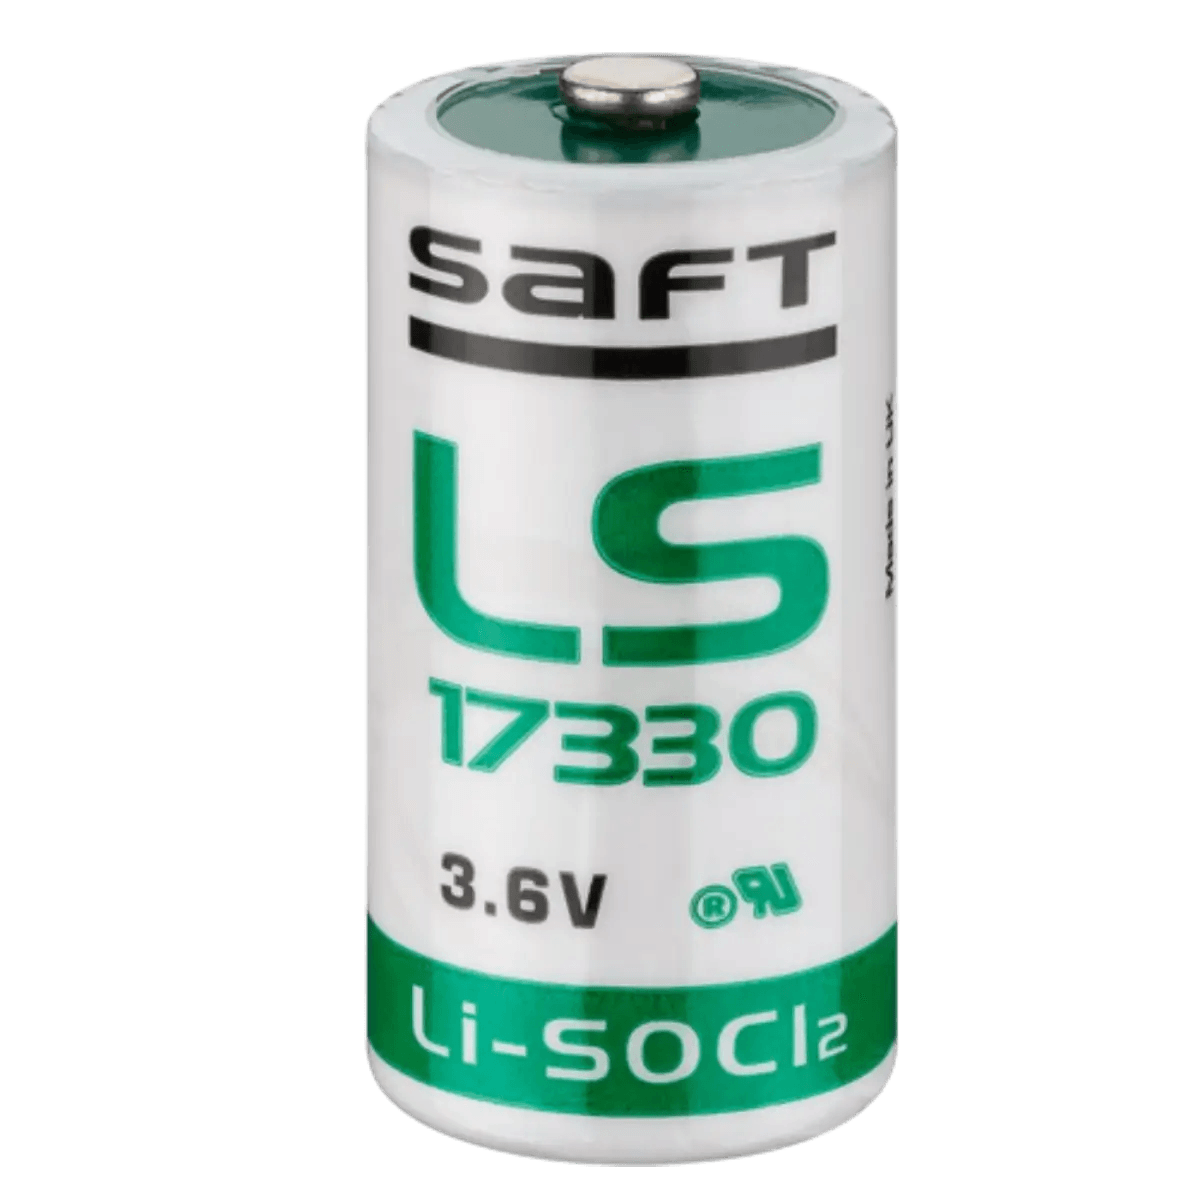 Pile LS17330 3.6V Saft, Lithium Thionyle Chloride, 2.1Ah